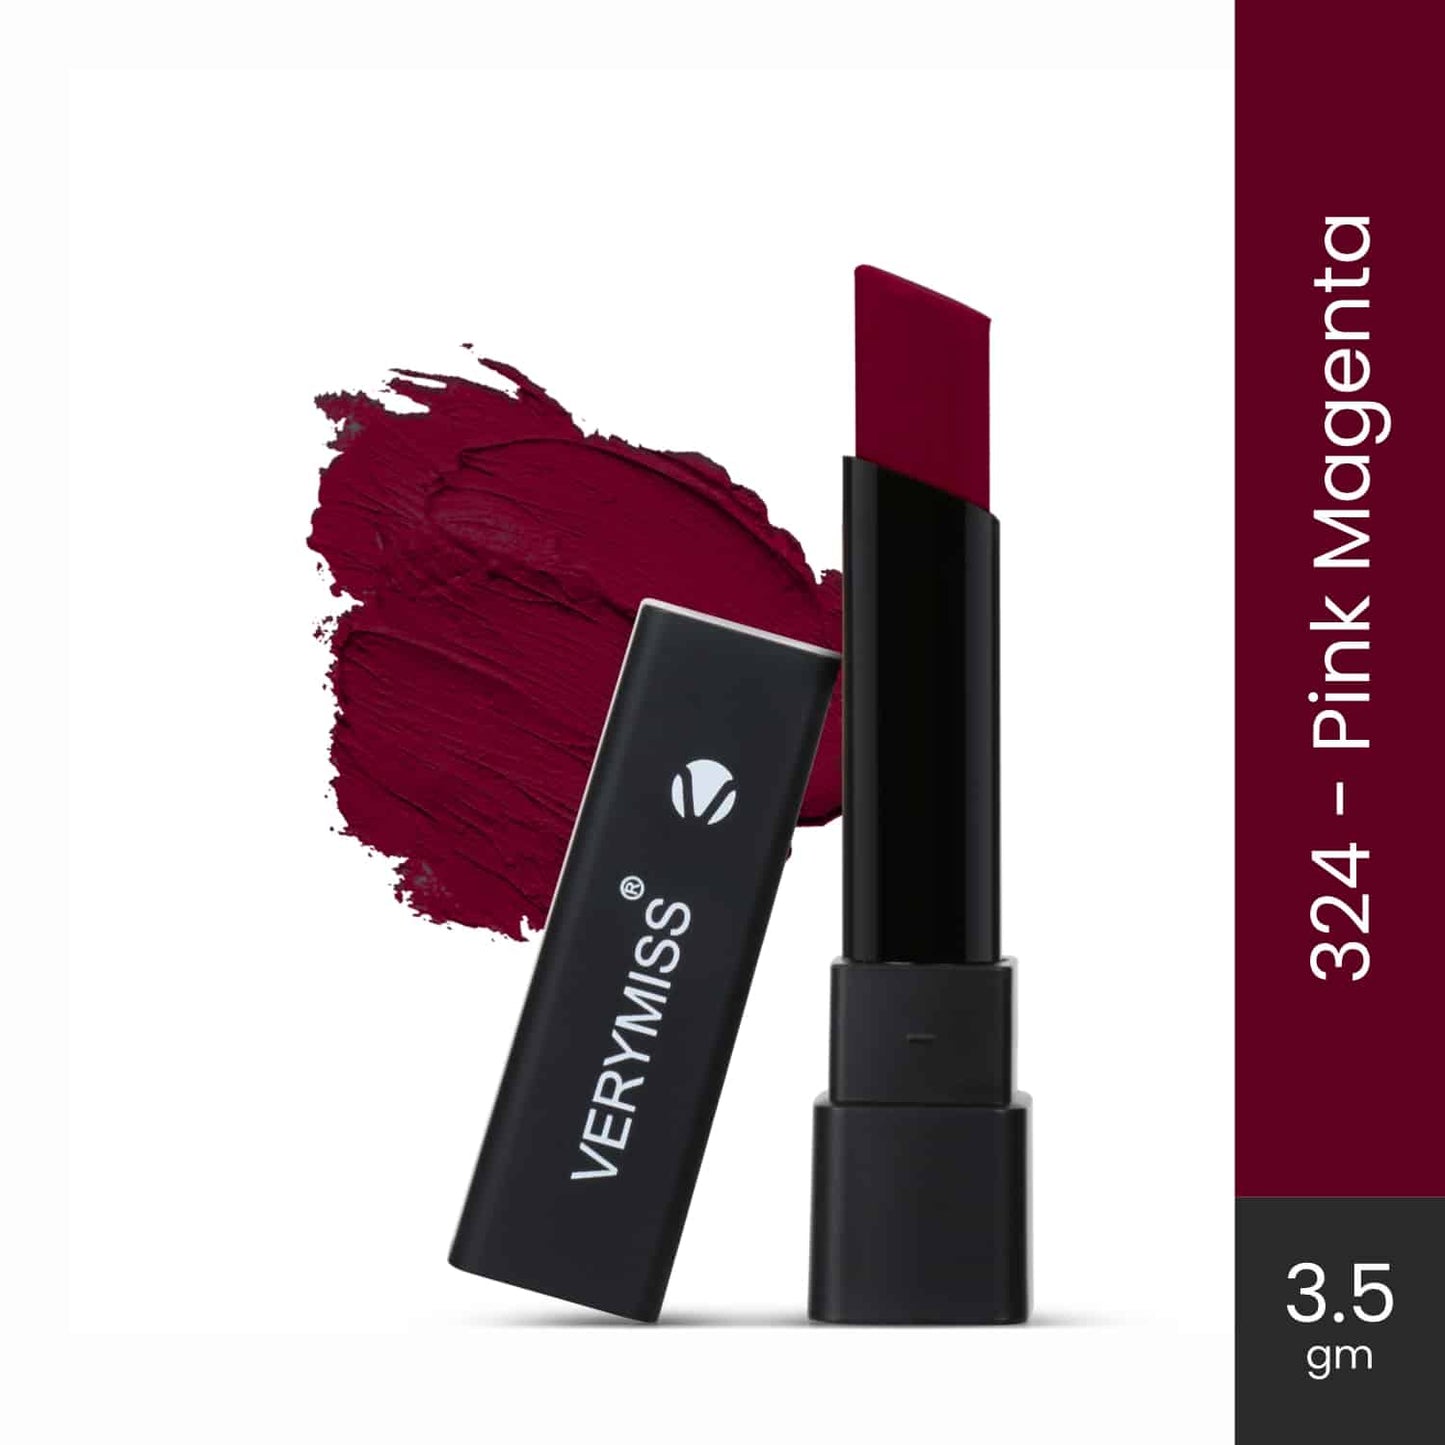 Ultra Rich Matte Lipstick - 324 Pink Magenta